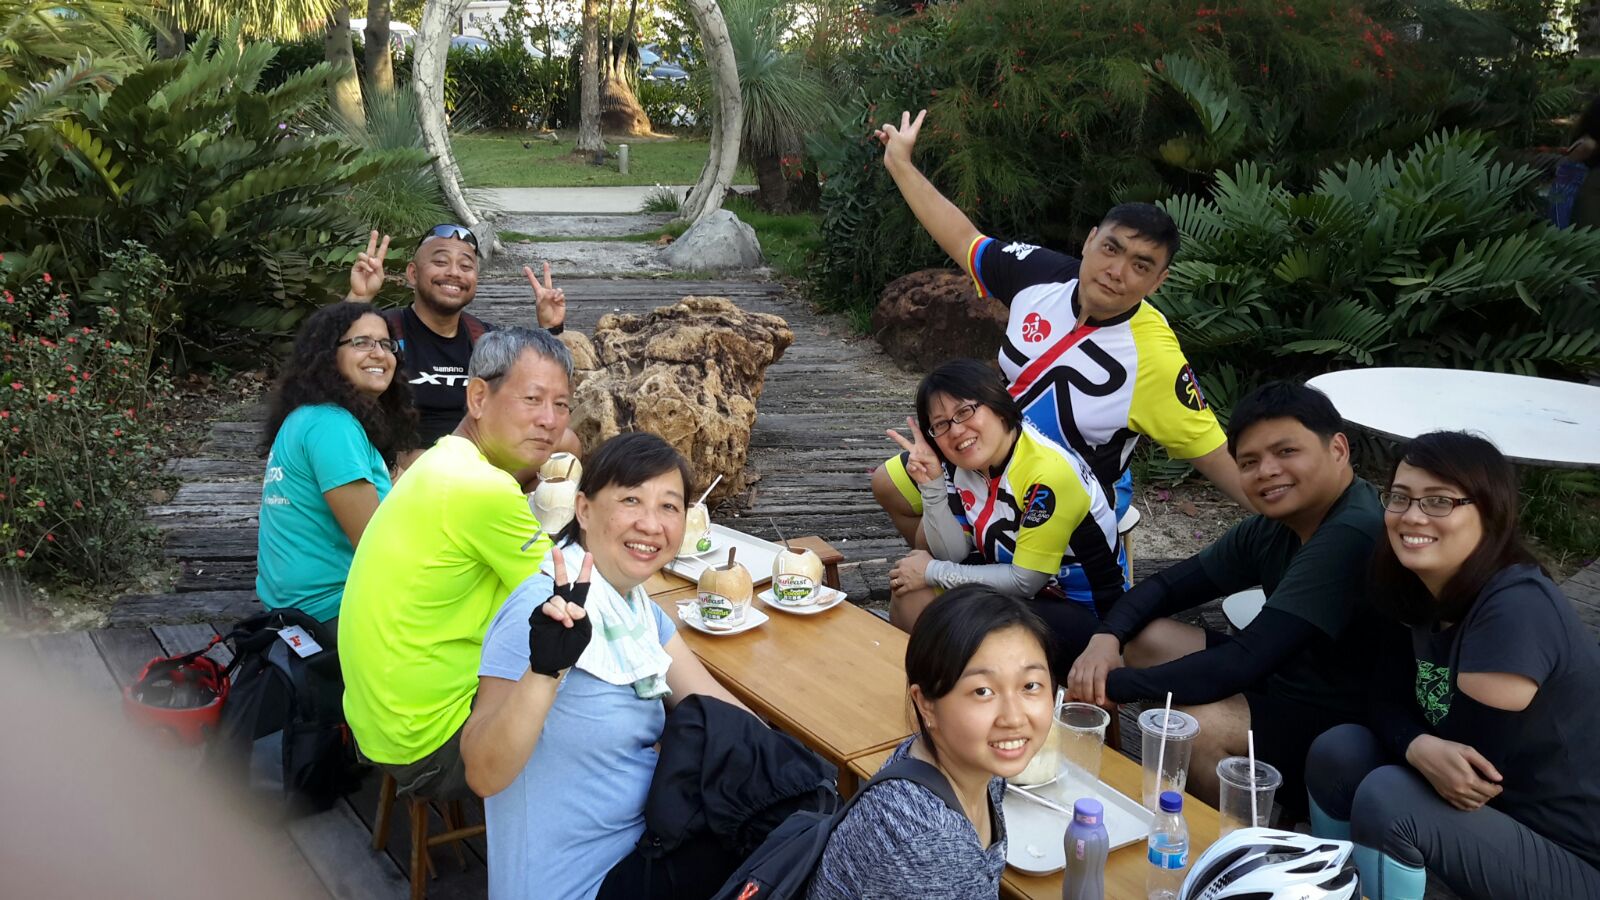 Shimano Cycling World Bike Cruise: A day @ Satay By The Bay